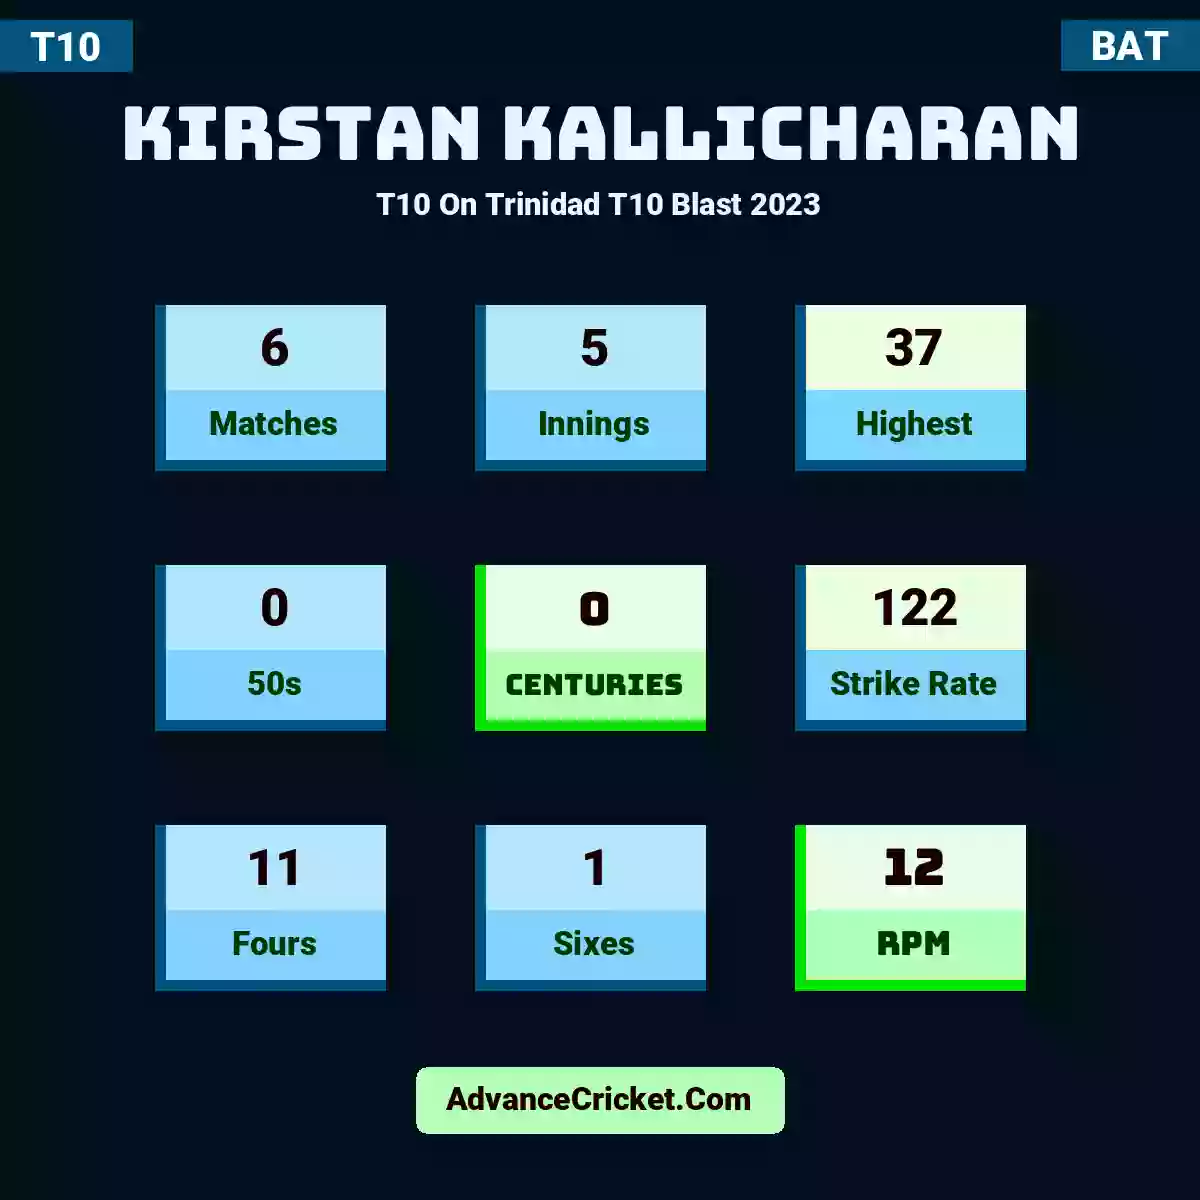 Kirstan Kallicharan T10  On Trinidad T10 Blast 2023, Kirstan Kallicharan played 6 matches, scored 37 runs as highest, 0 half-centuries, and 0 centuries, with a strike rate of 122. K.Kallicharan hit 11 fours and 1 sixes, with an RPM of 12.